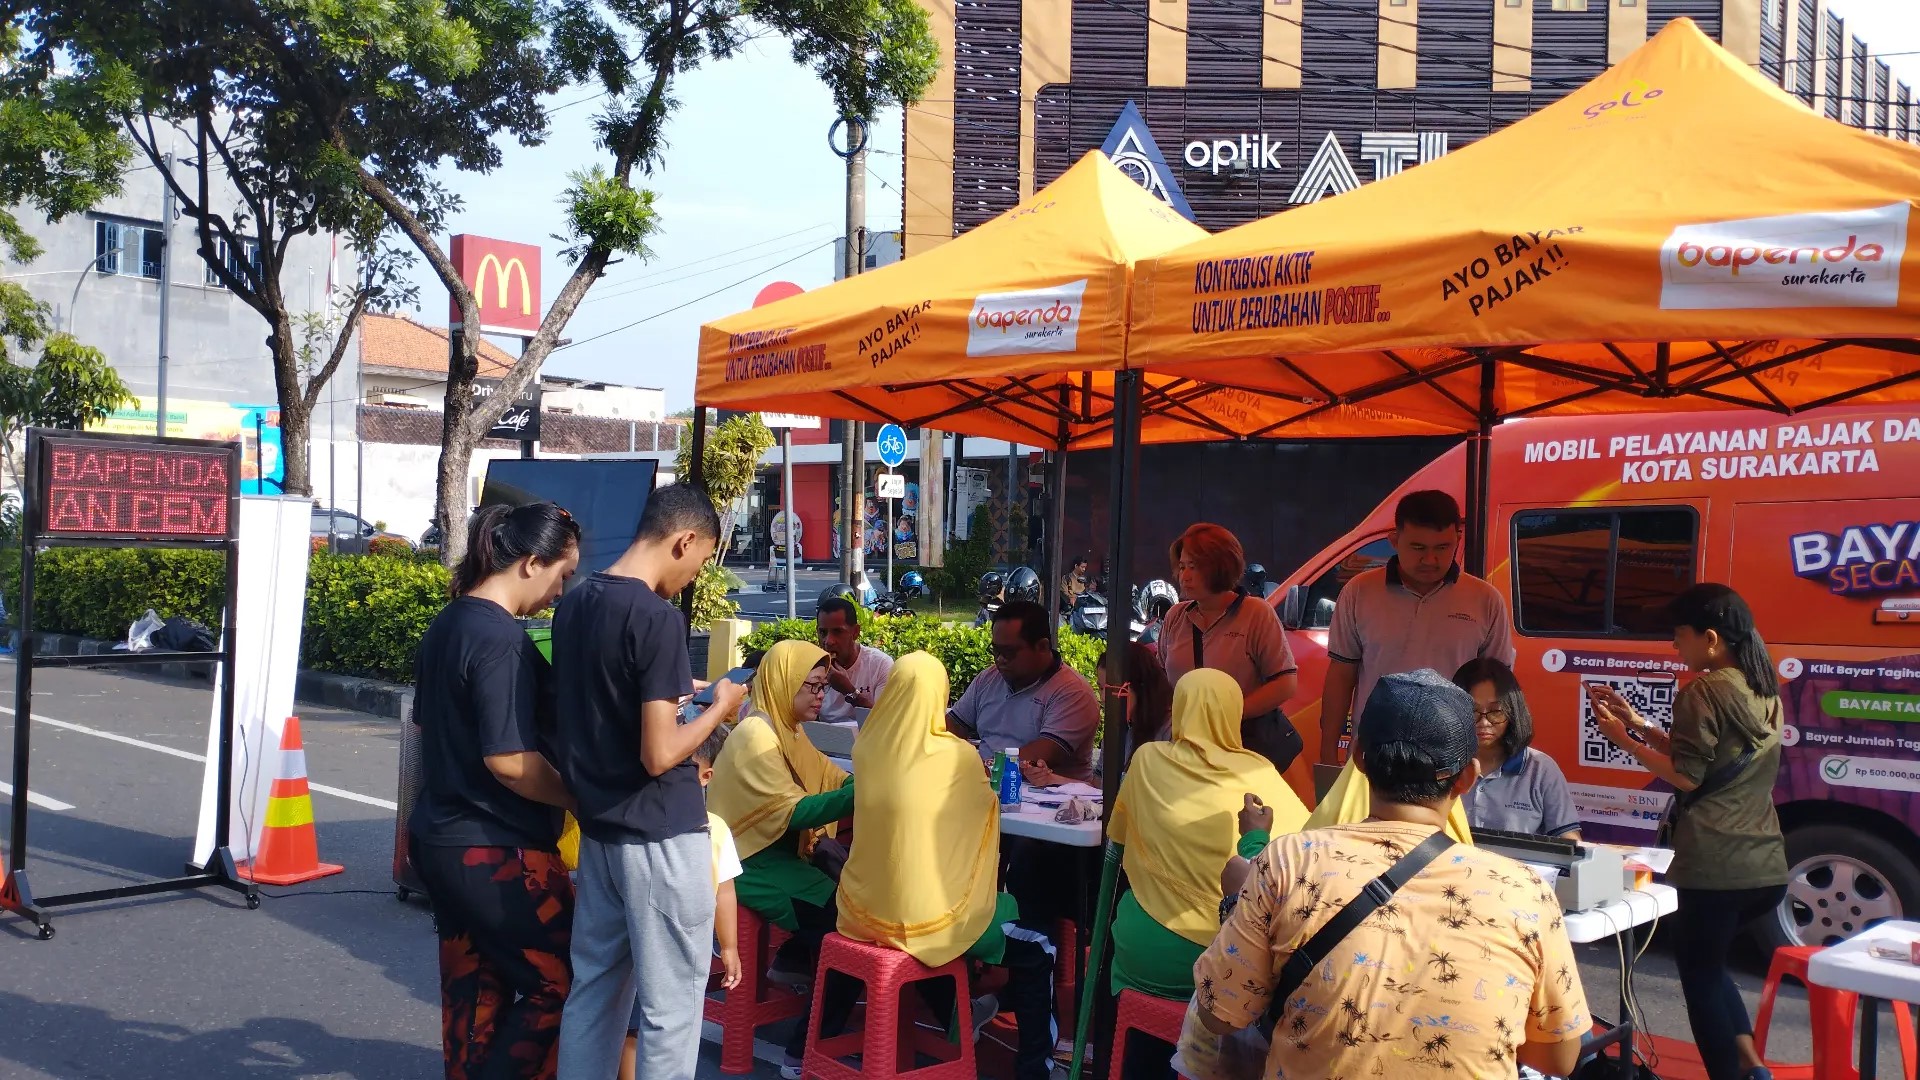 Stand Pajak Daerah BAPENDA Kota Surakarta pada Car Free Day